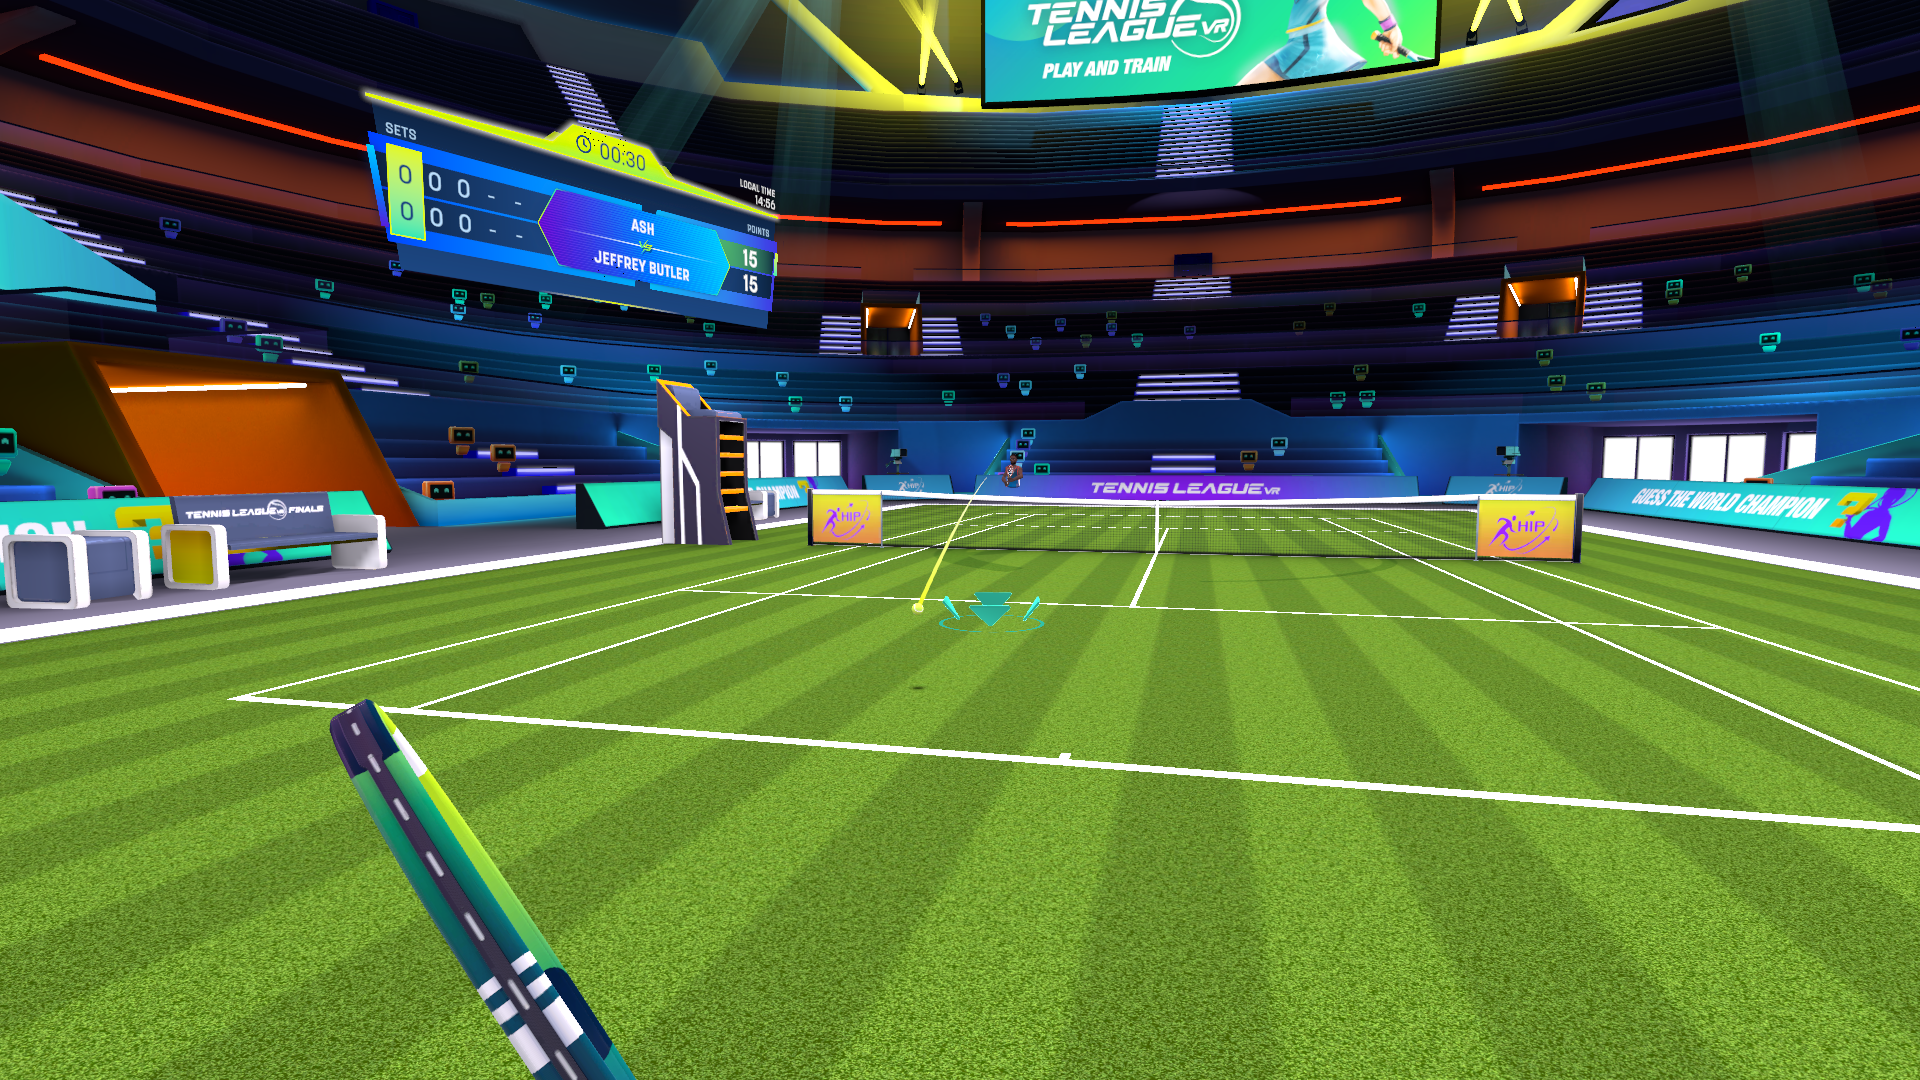 Tennis League VR - screenshot